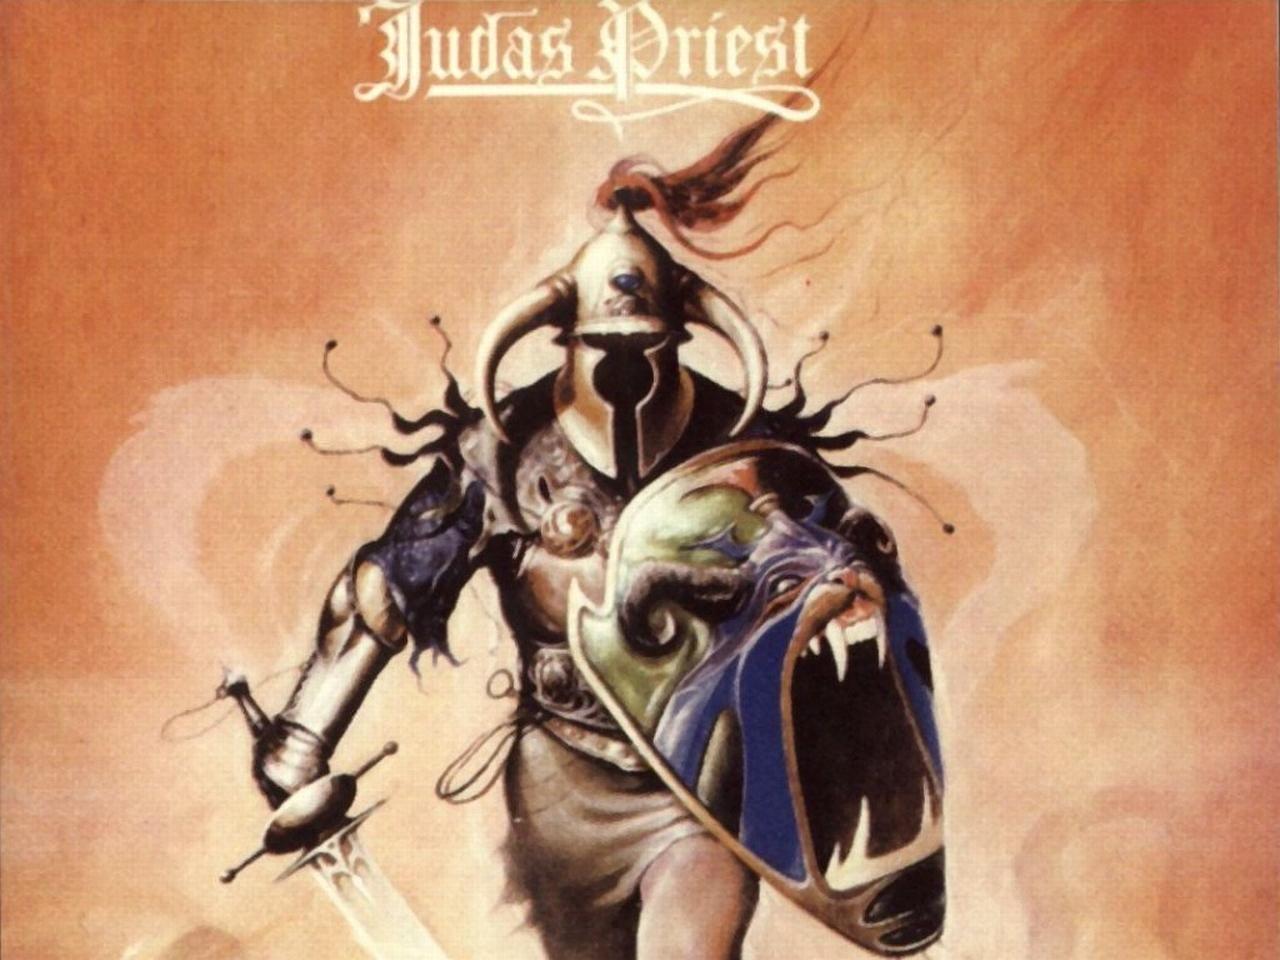 Judas Priest Wallpaper HD Download